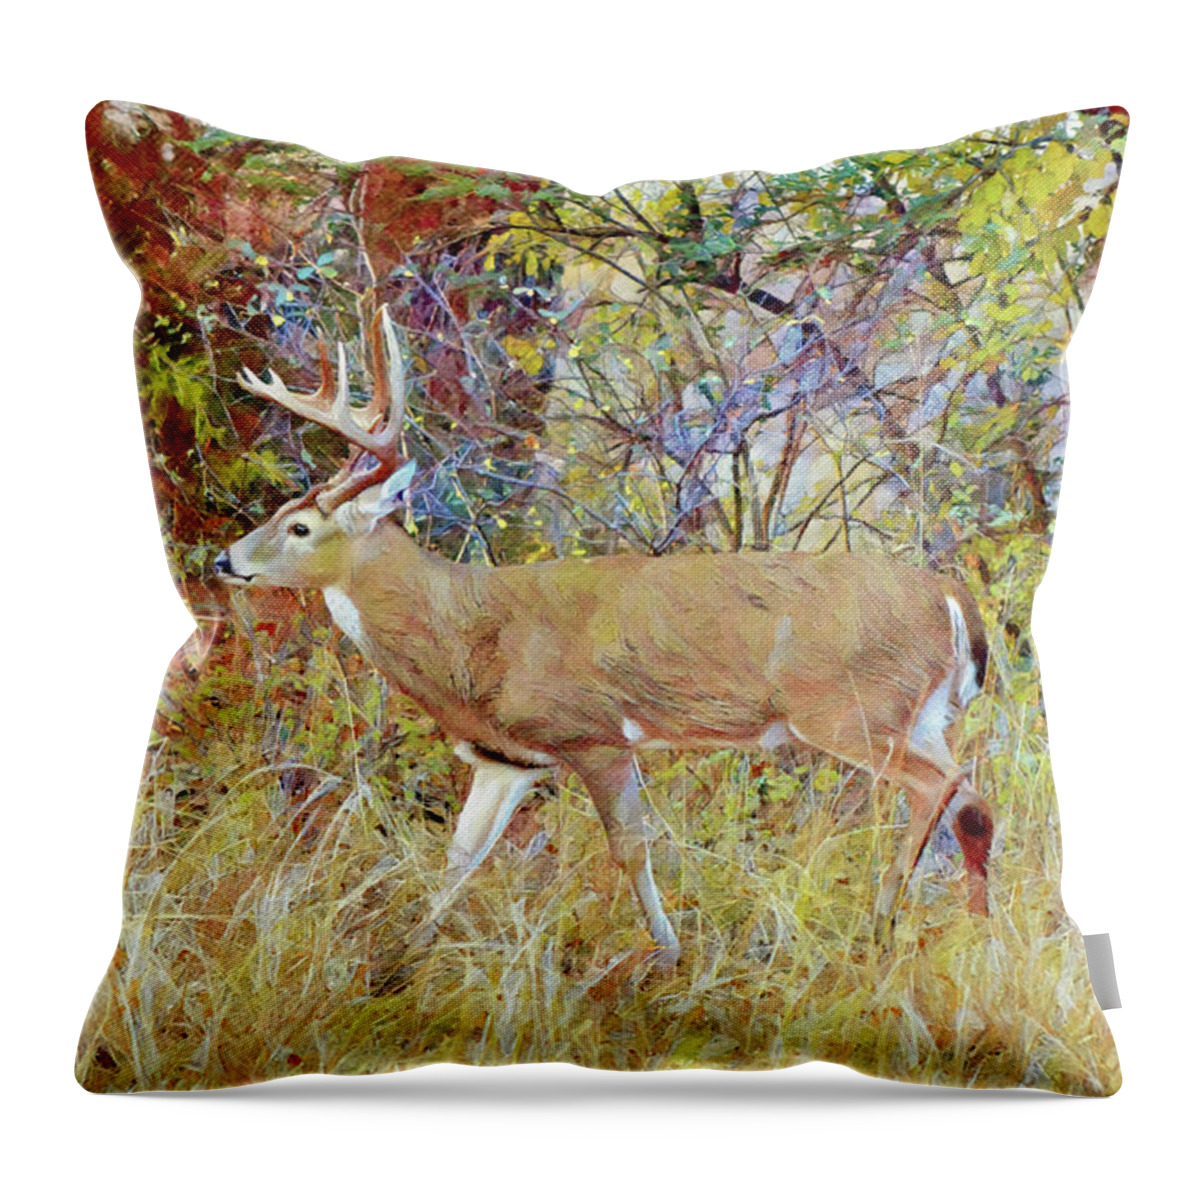 Deer Throw Pillow featuring the digital art Big Buck Deer Just Passing Through by Gaby Ethington